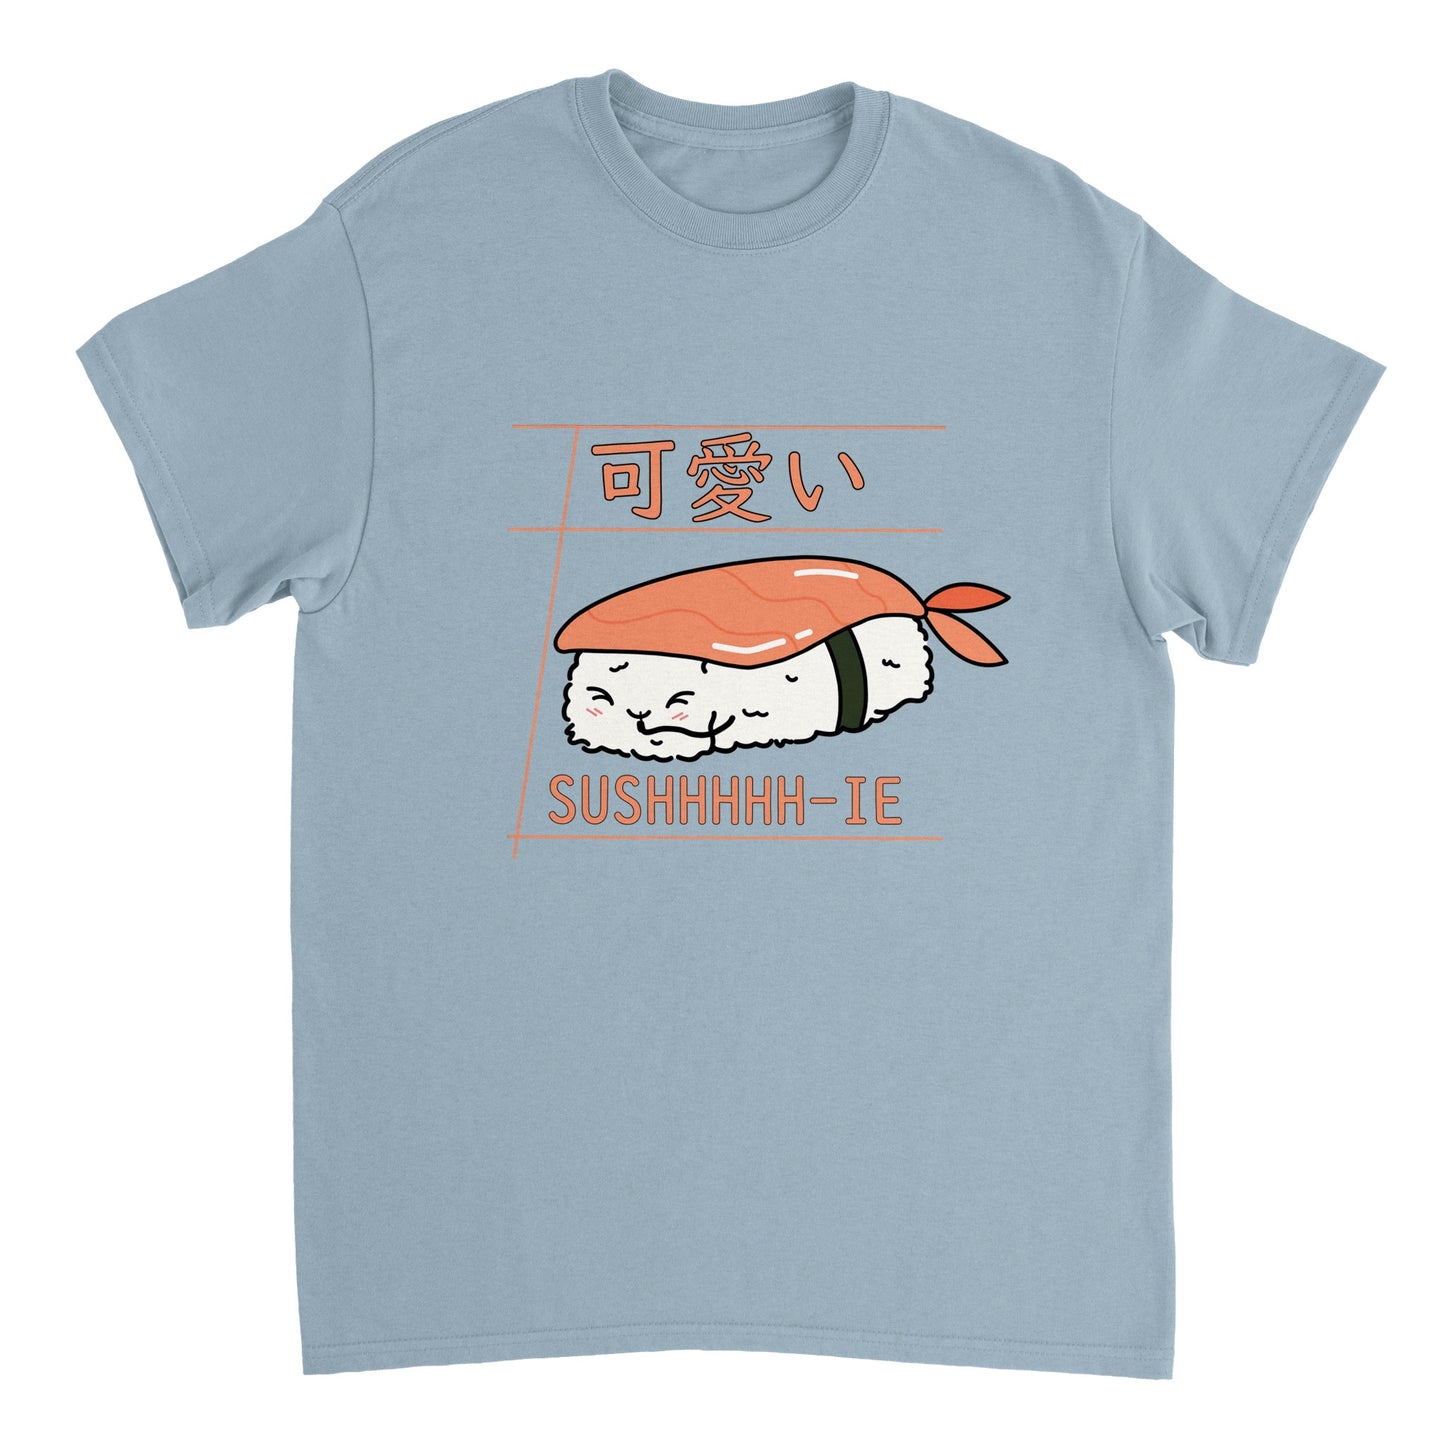 SUSHHHHH-IE Otaku World T Shirt